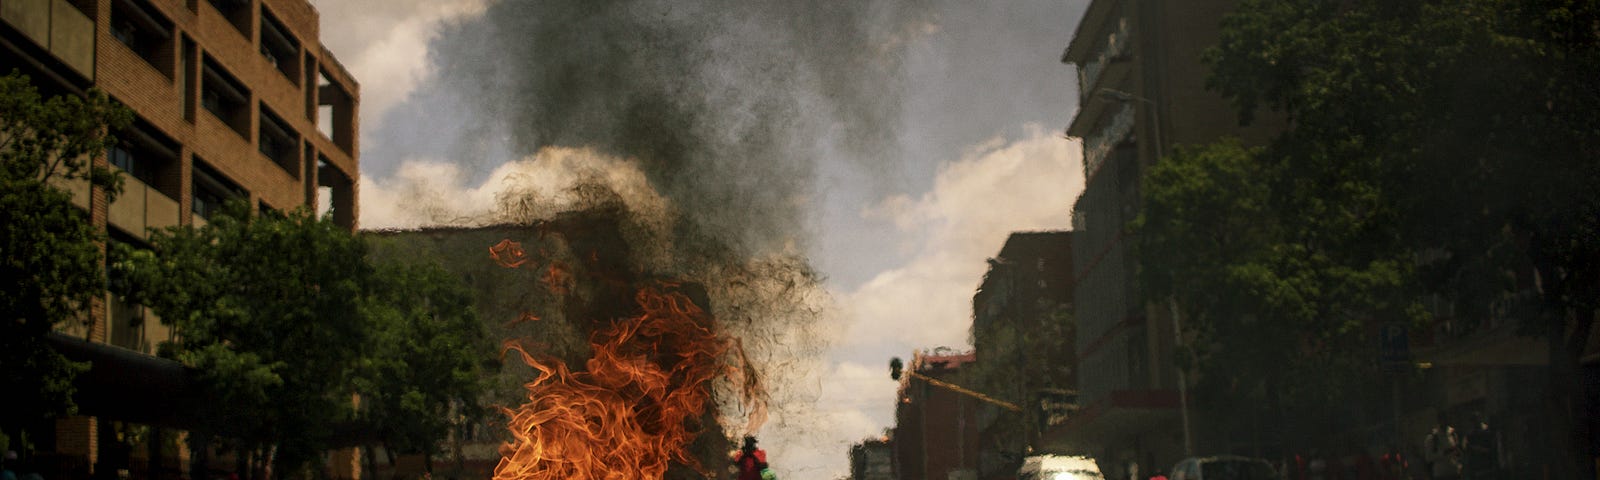 Burning debris in a city street.